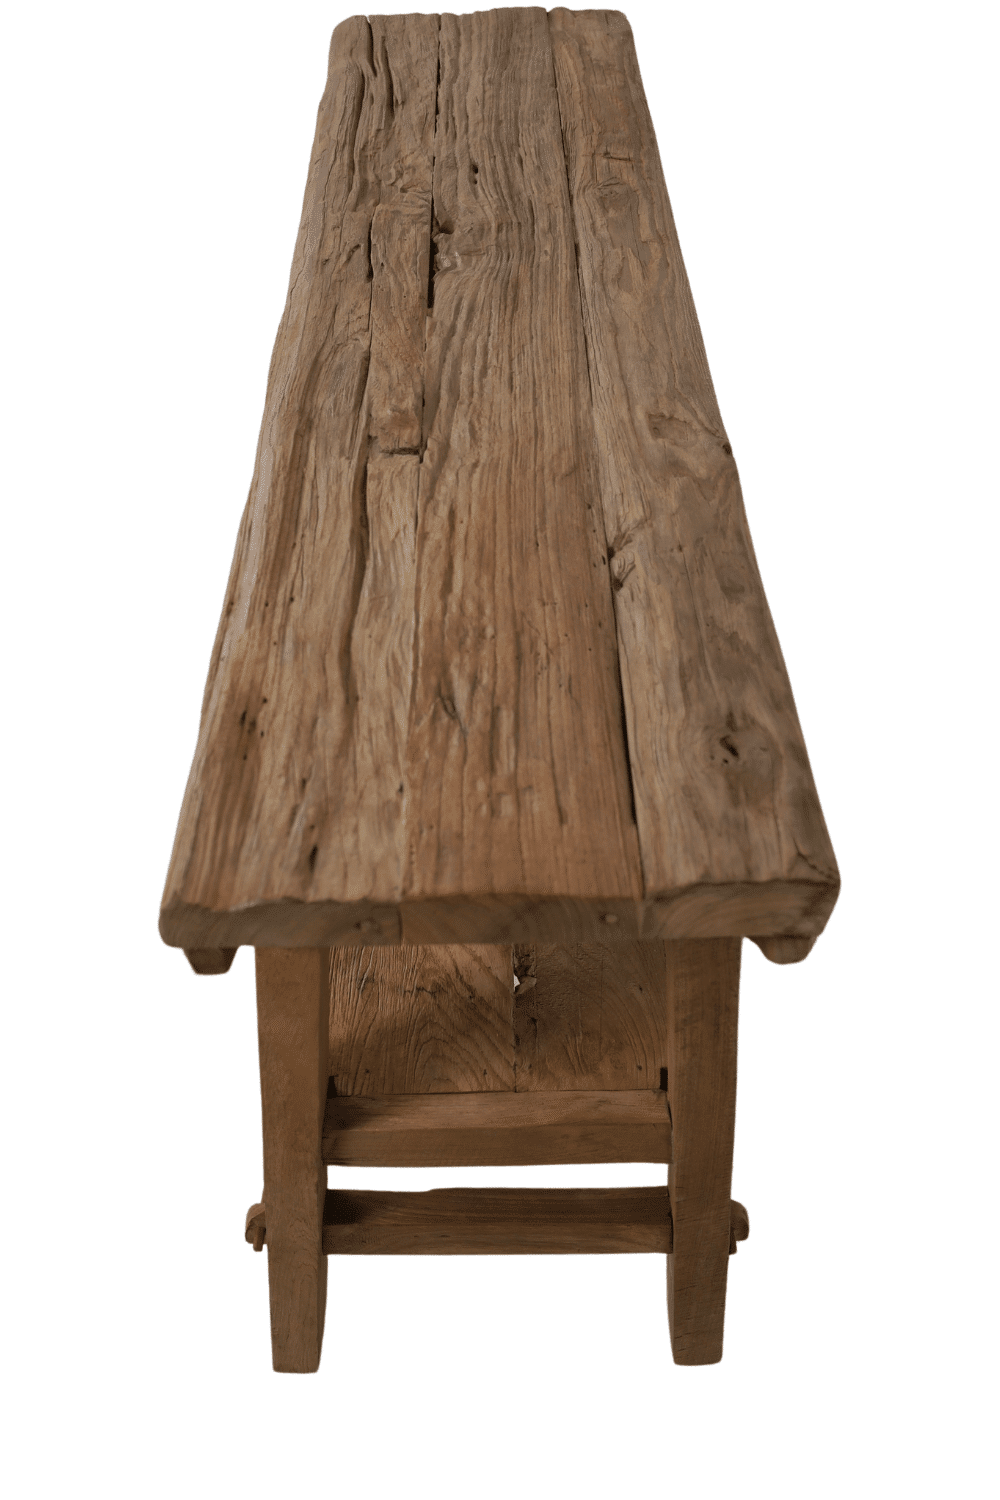 Stoer teak houten sidetable wandtafel muurtafel haktafel 150 cm